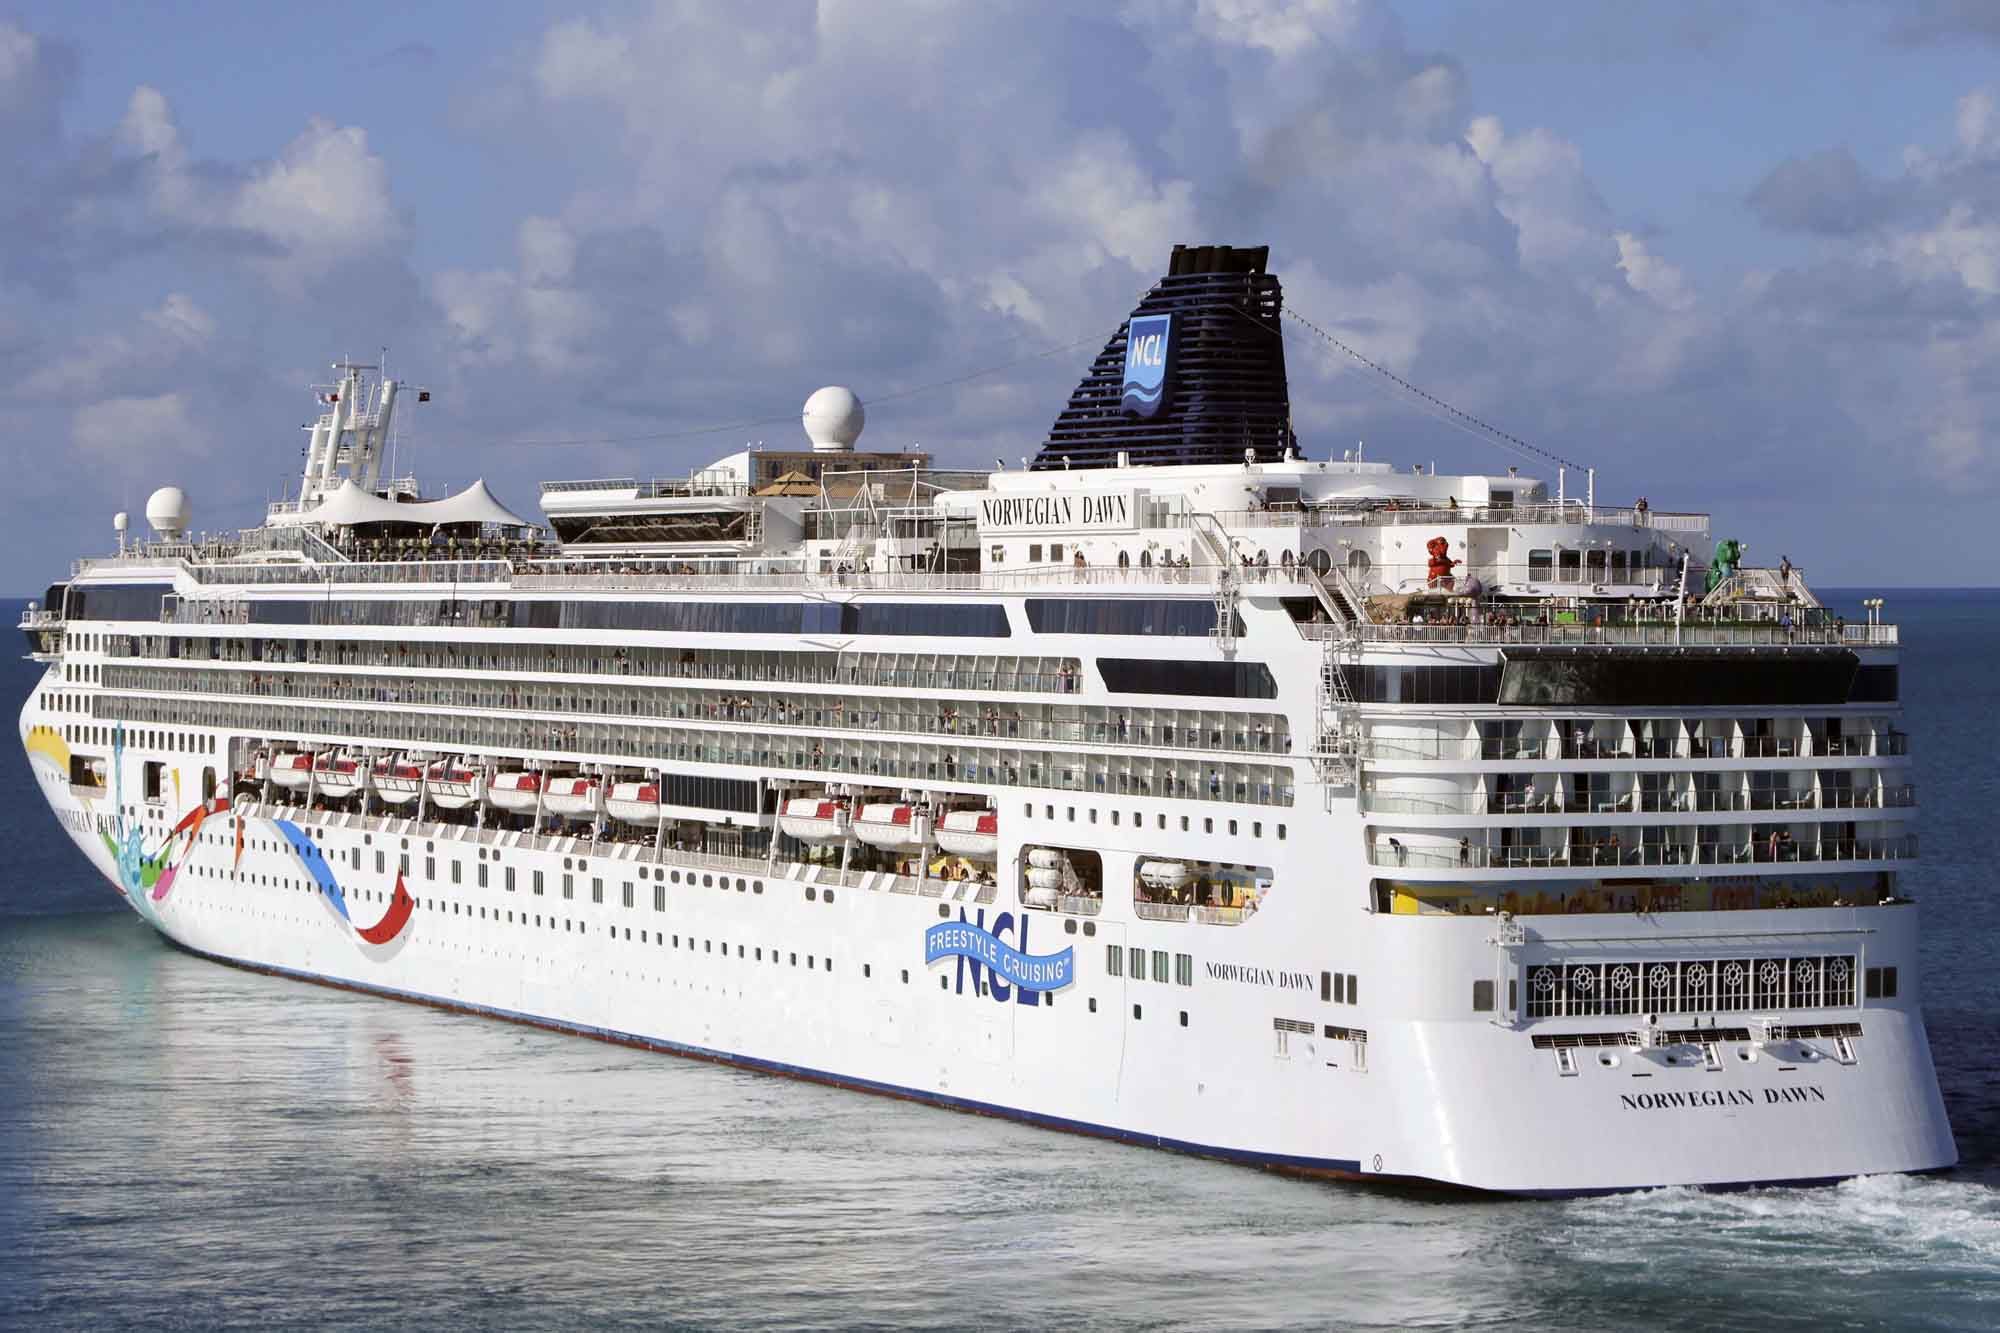 cruise-ship-norwegian-dawn-departs-port-near-hamilton-bermuda